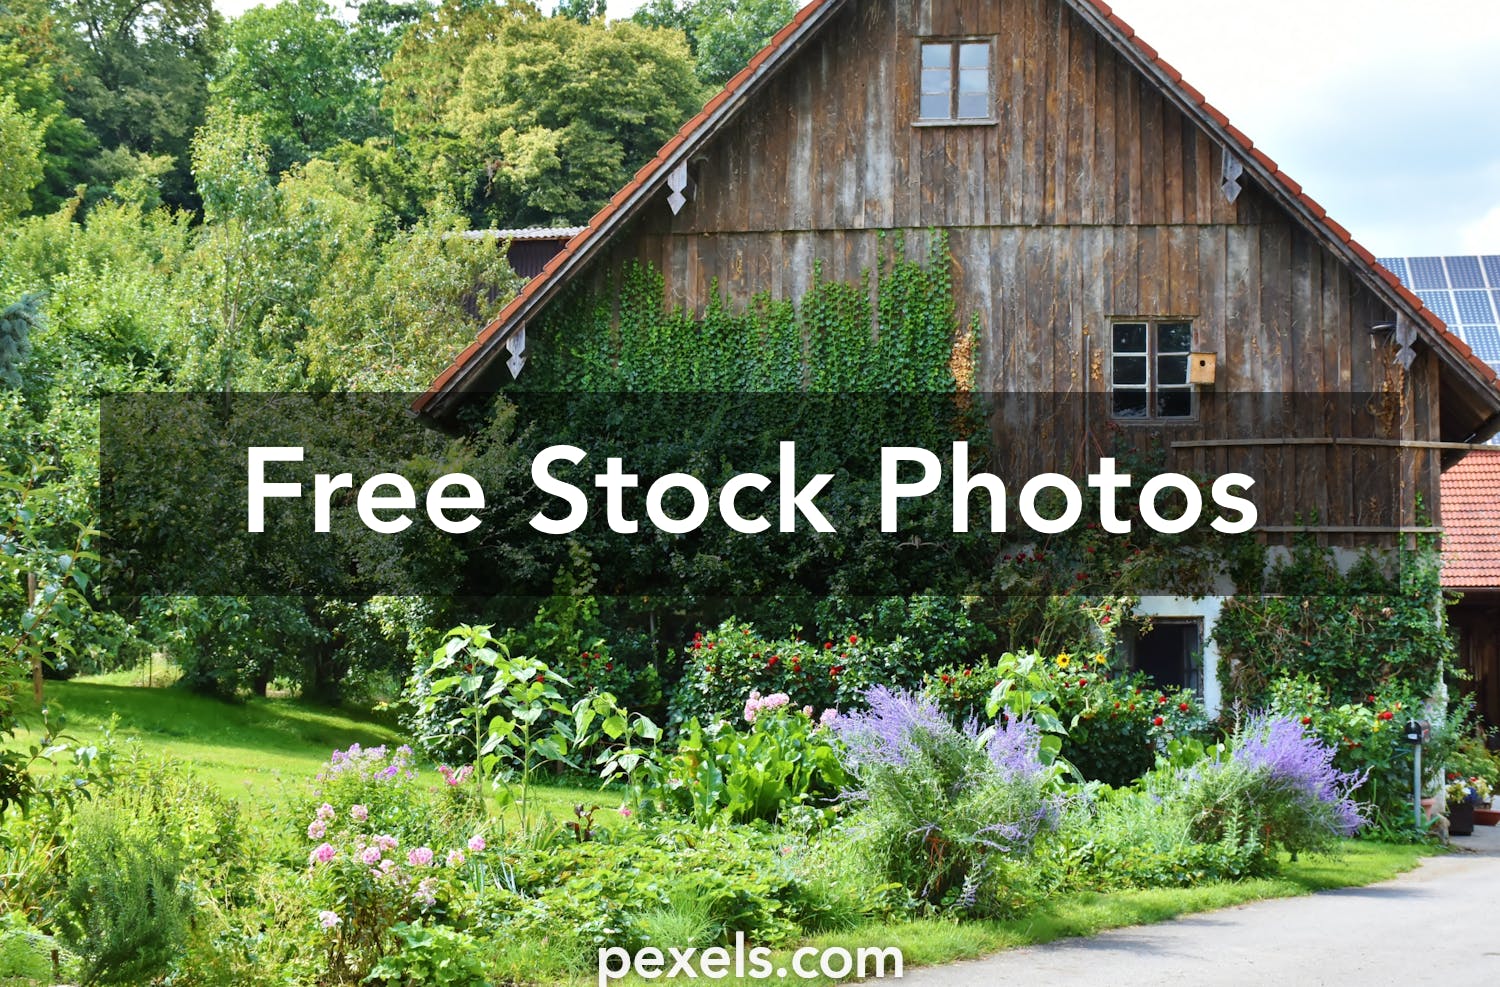 1000 Amazing Farm  Yard Photos Pexels   Free Stock Photos